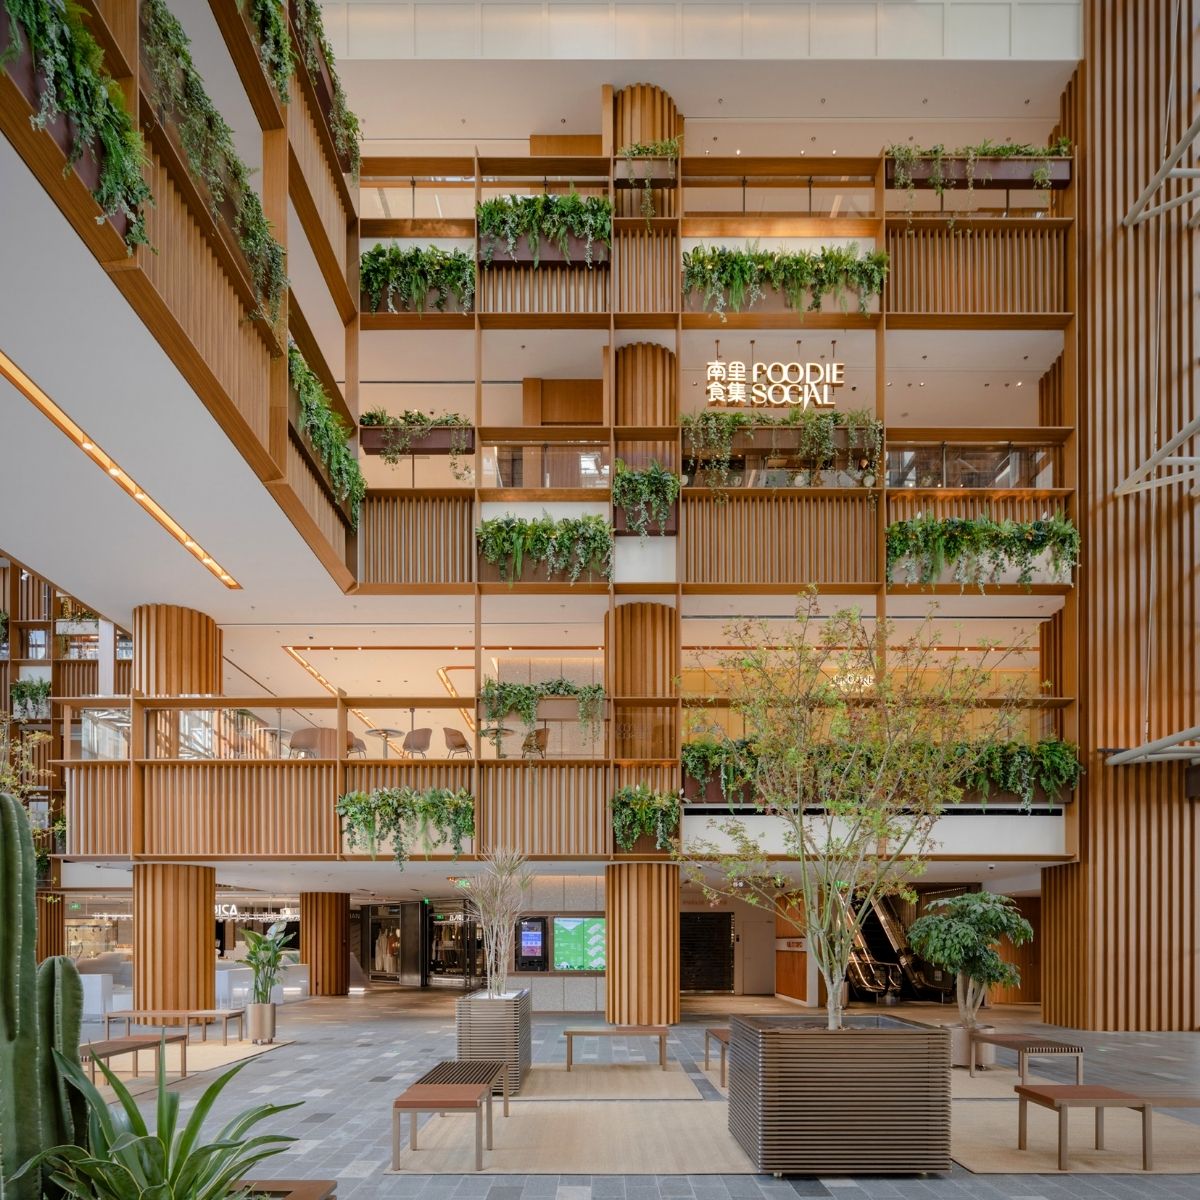 Thursd Feature AIM Architecture Turns Shopping Mall Atrium Into Indoor Jungle